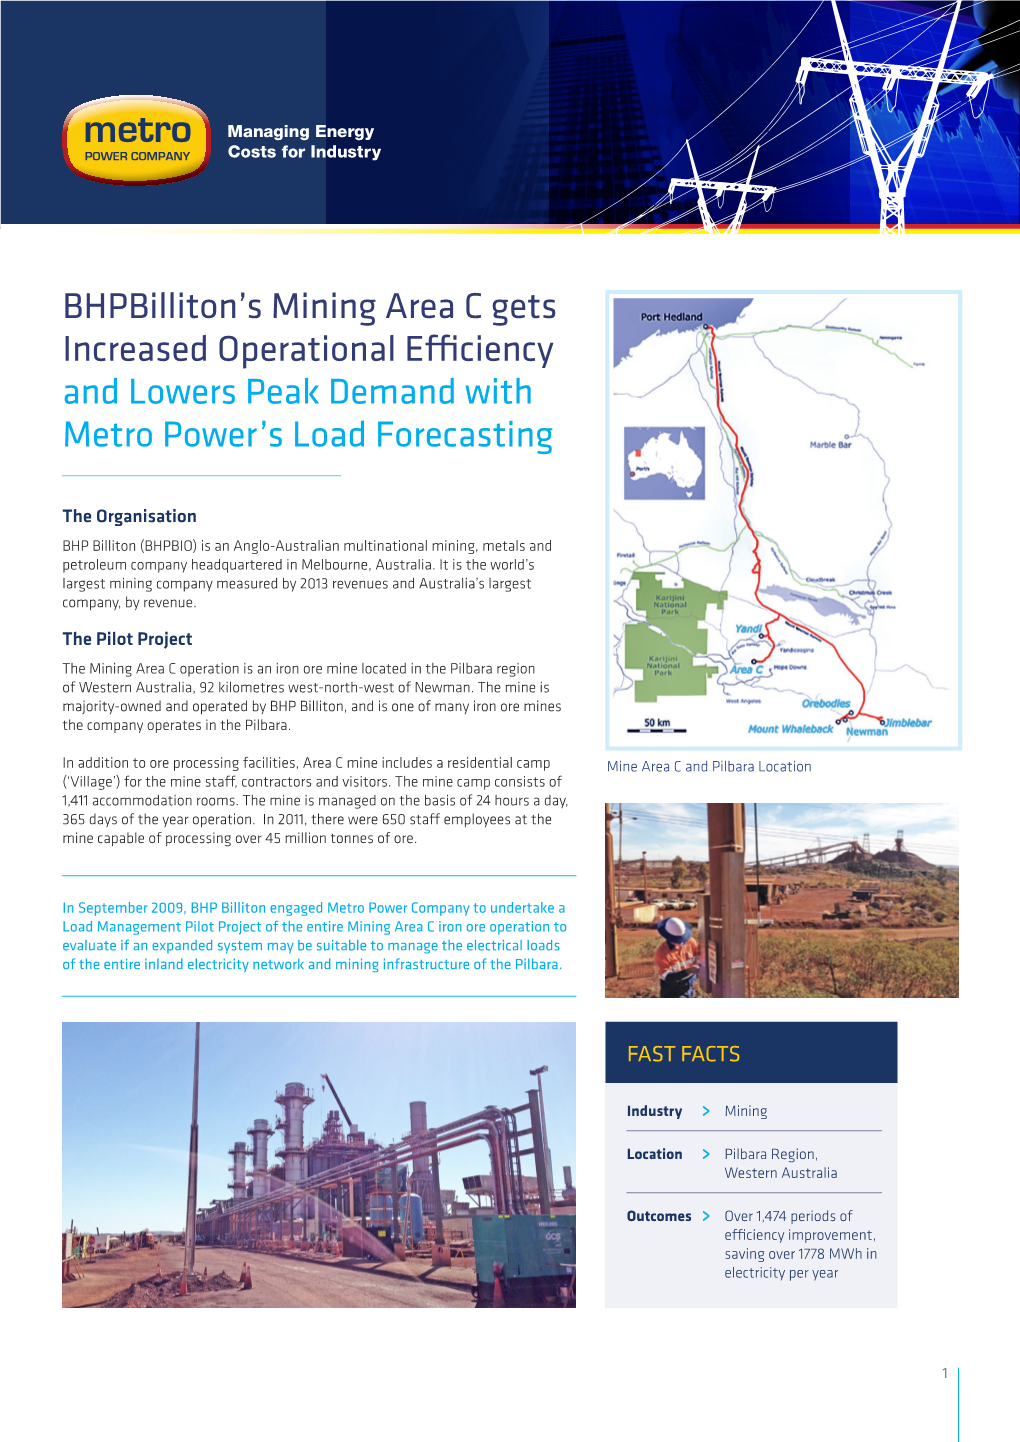 Bhpbilliton's Mining Area C Gets Increased Operational Efficiency